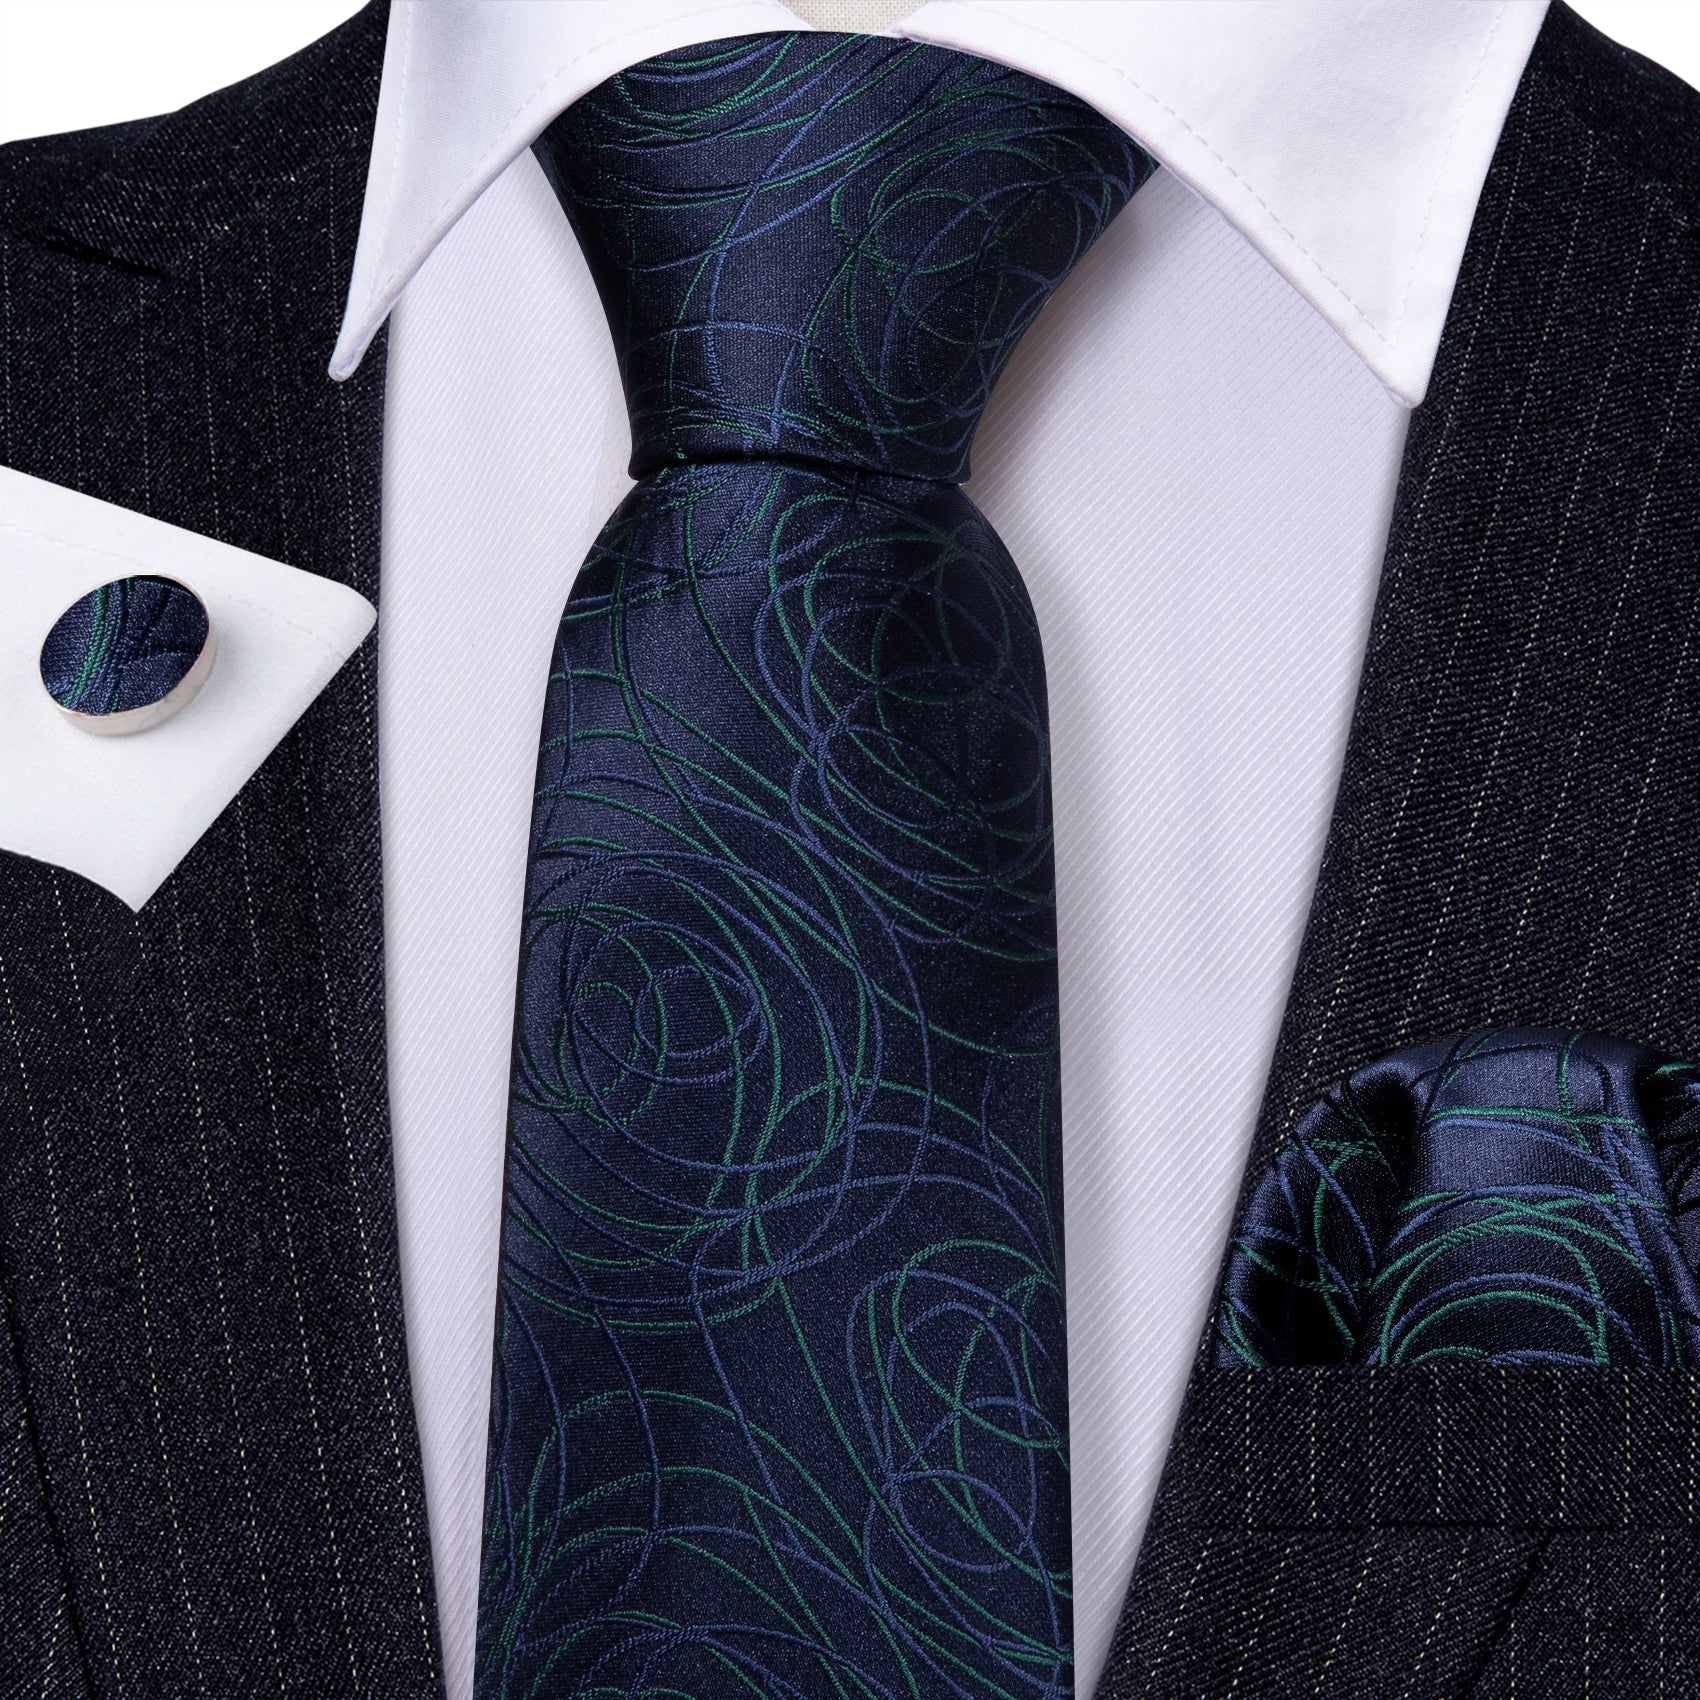 Barry Wang Blue Tie Green Line Silk Tie Handkerchief Cufflinks Set